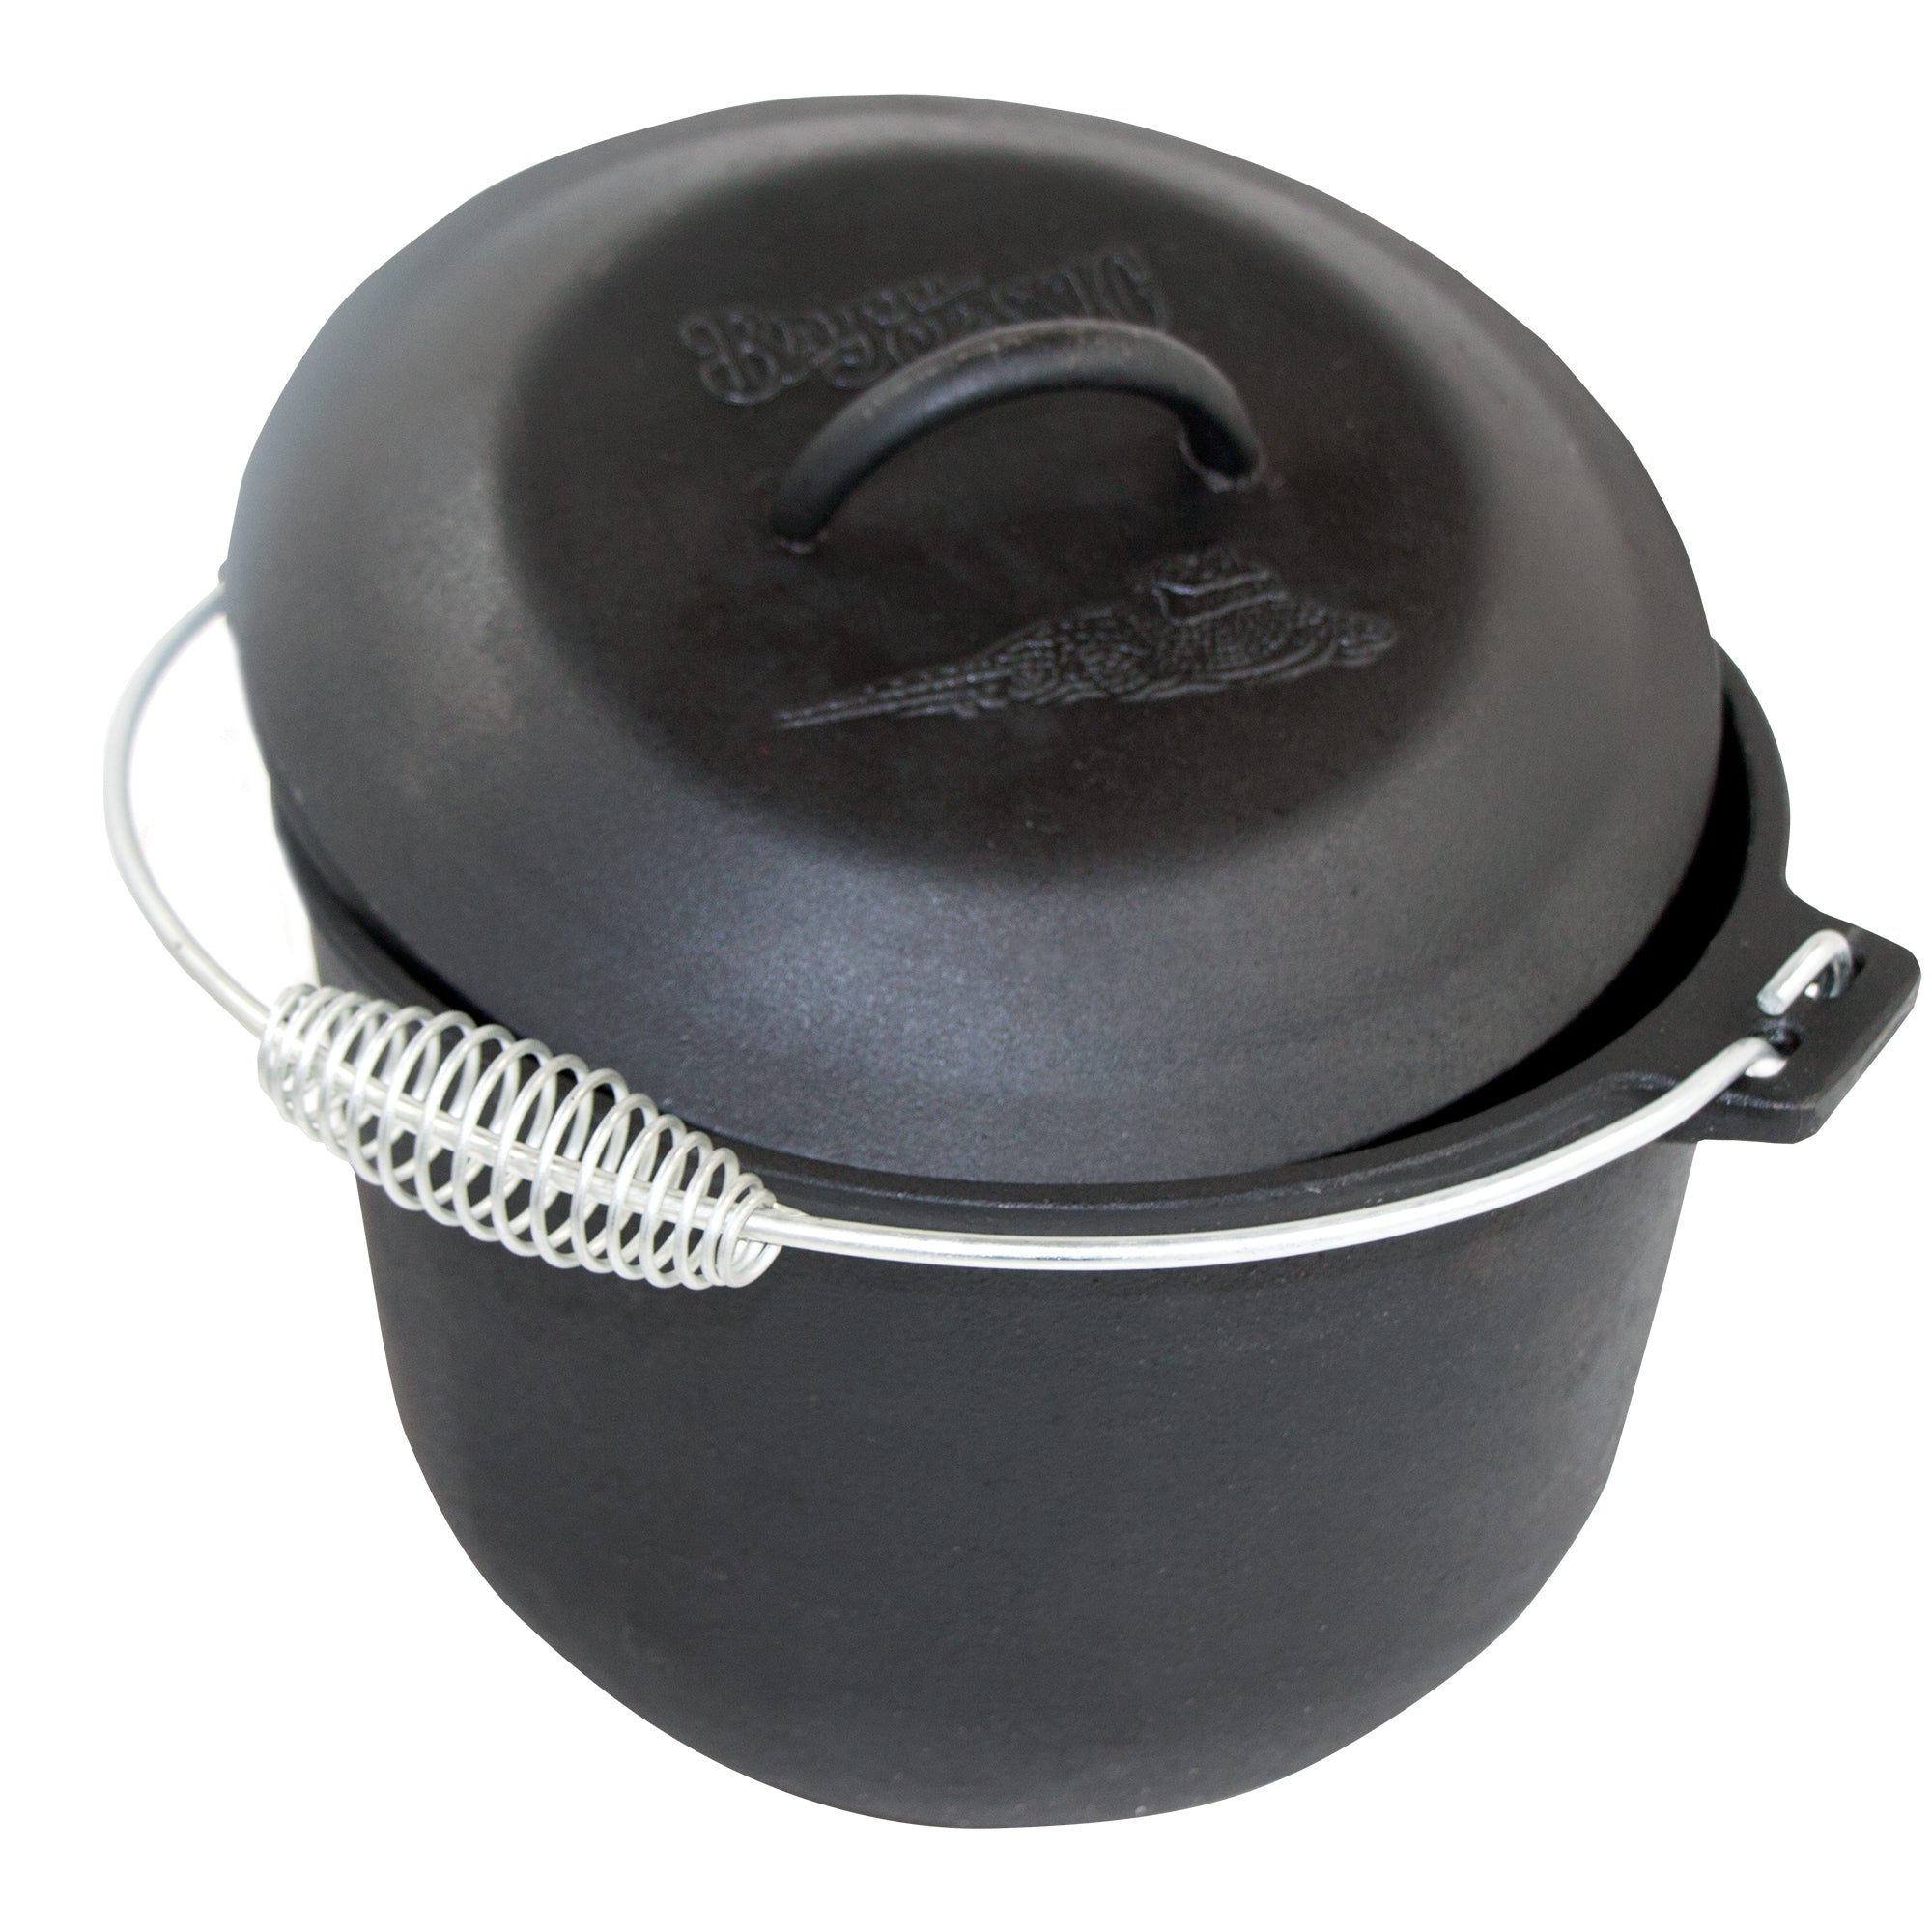  Bayou Classic 7441 1-qt Covered Cast Iron Sauce Pot